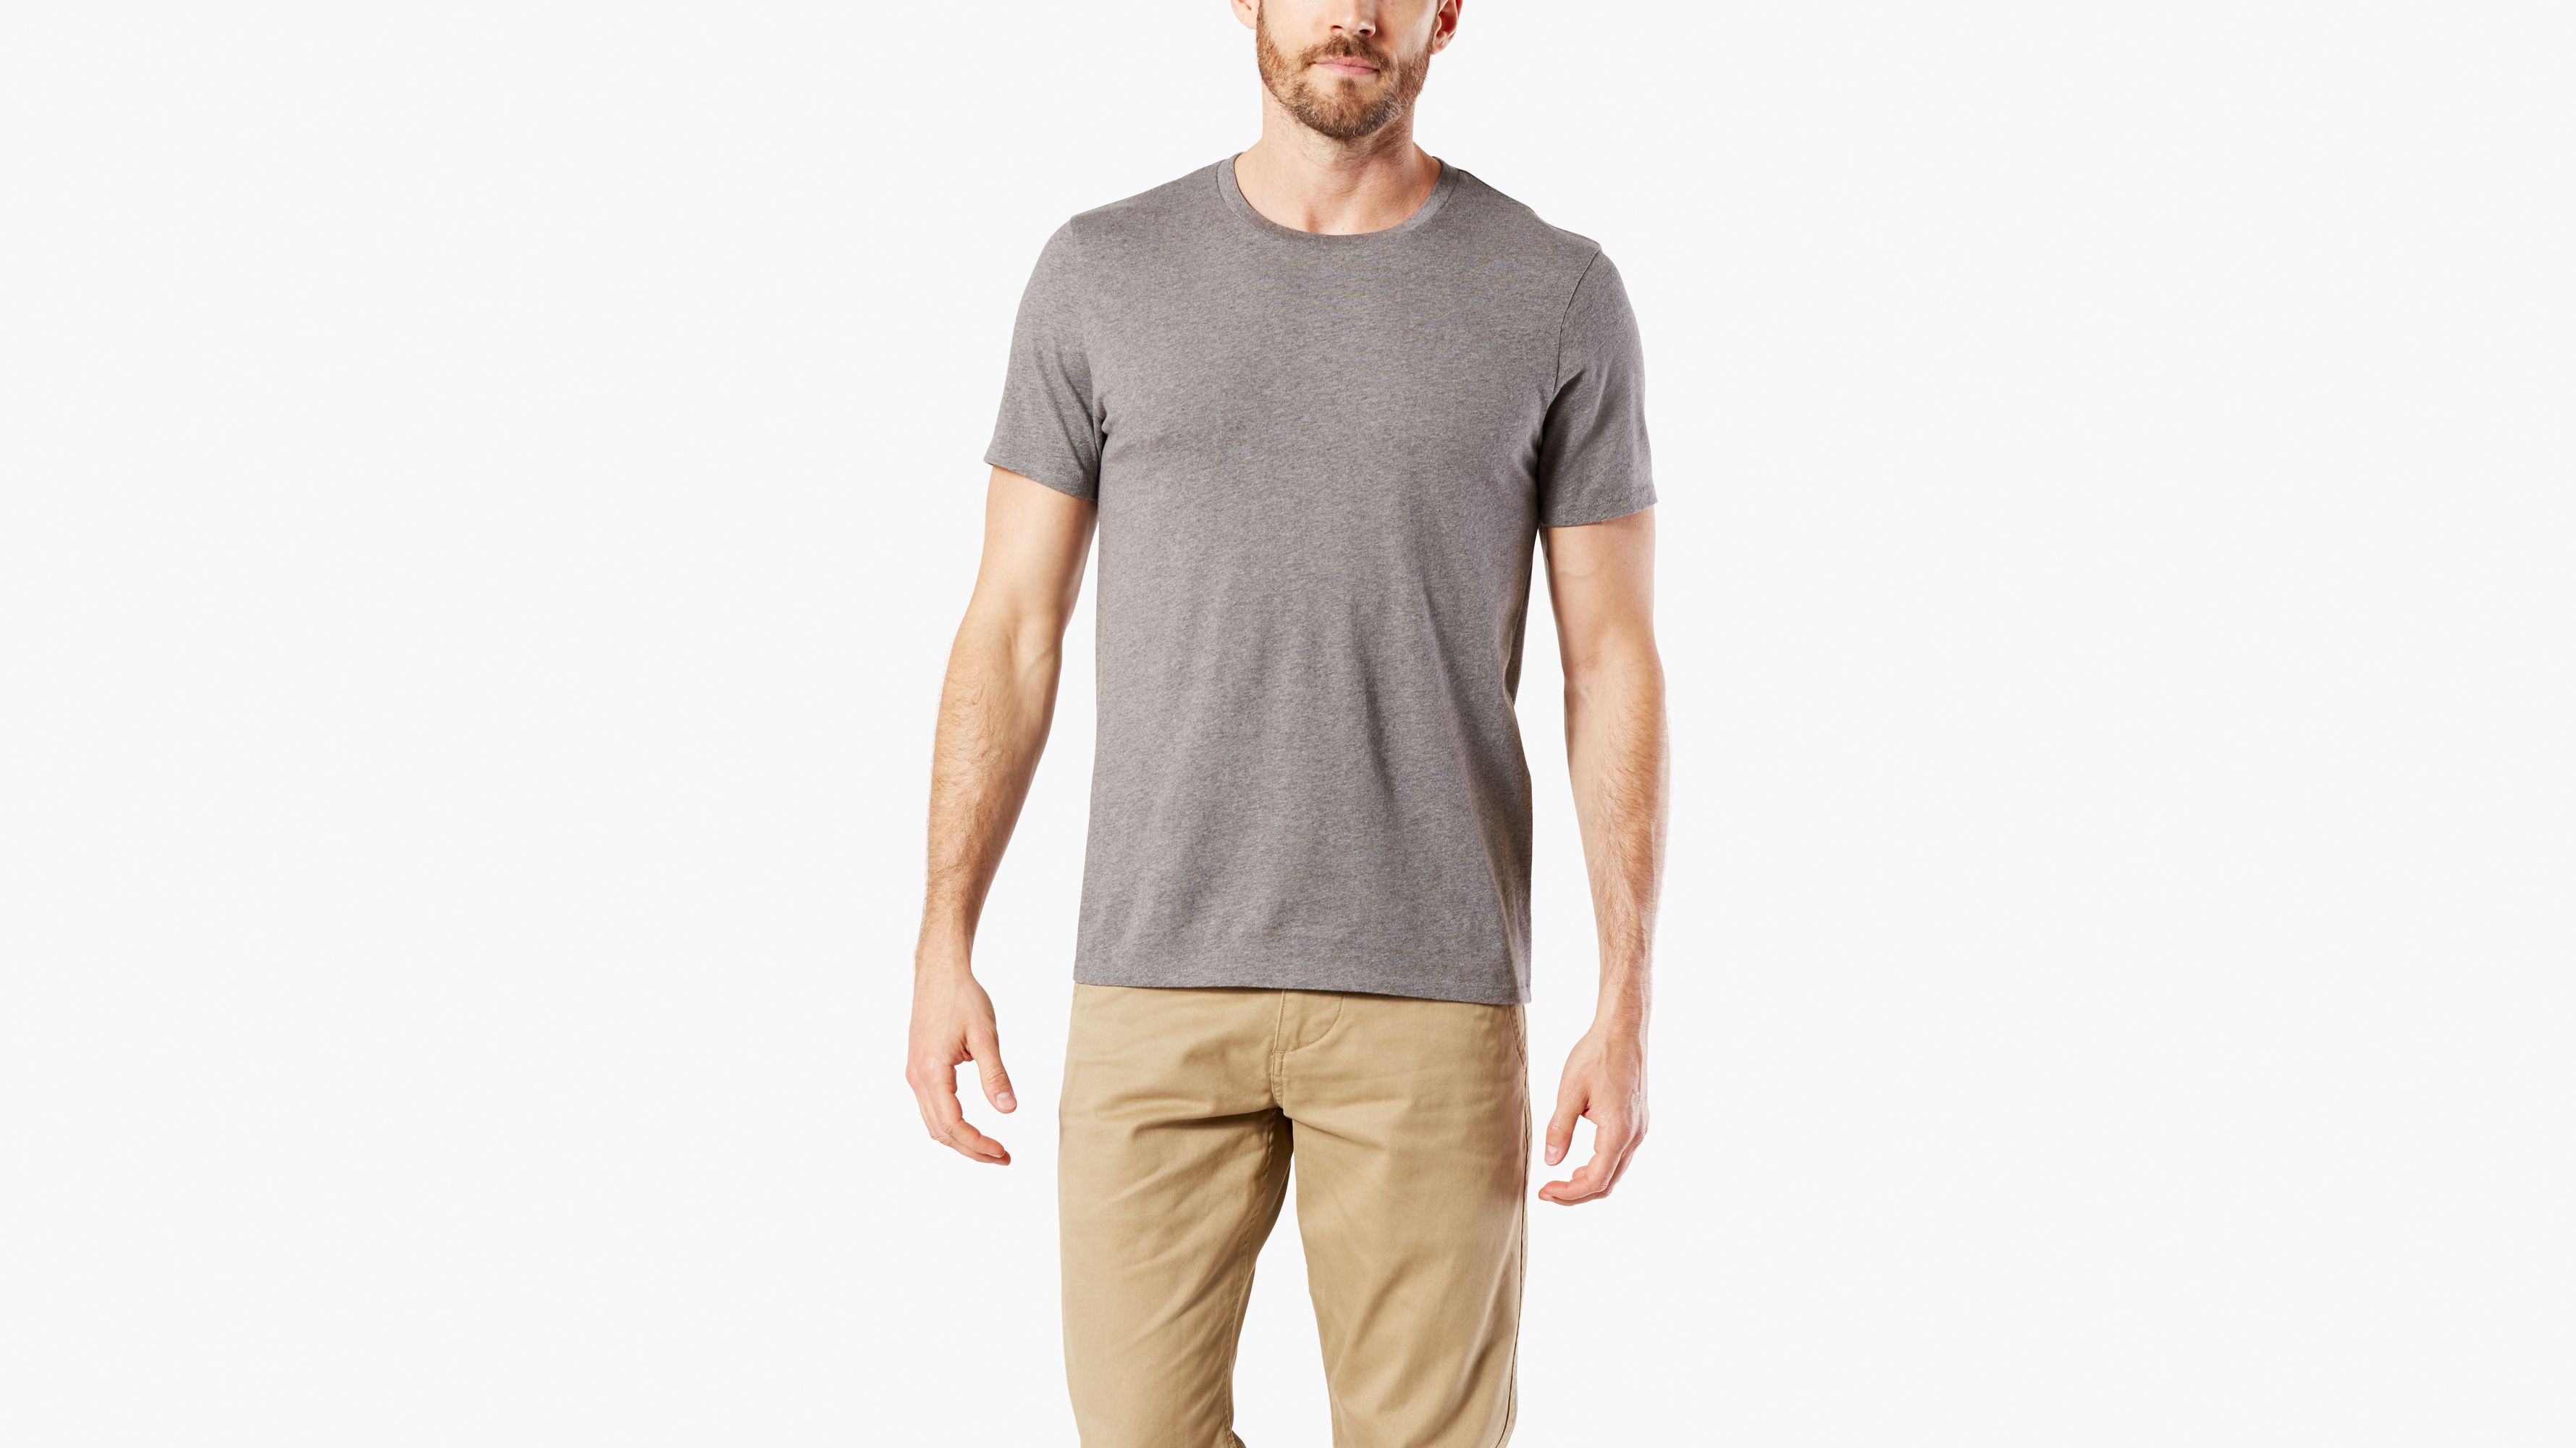 Men's Shirts - Shop Dress and Casual Shirts for Men | Dockers® US